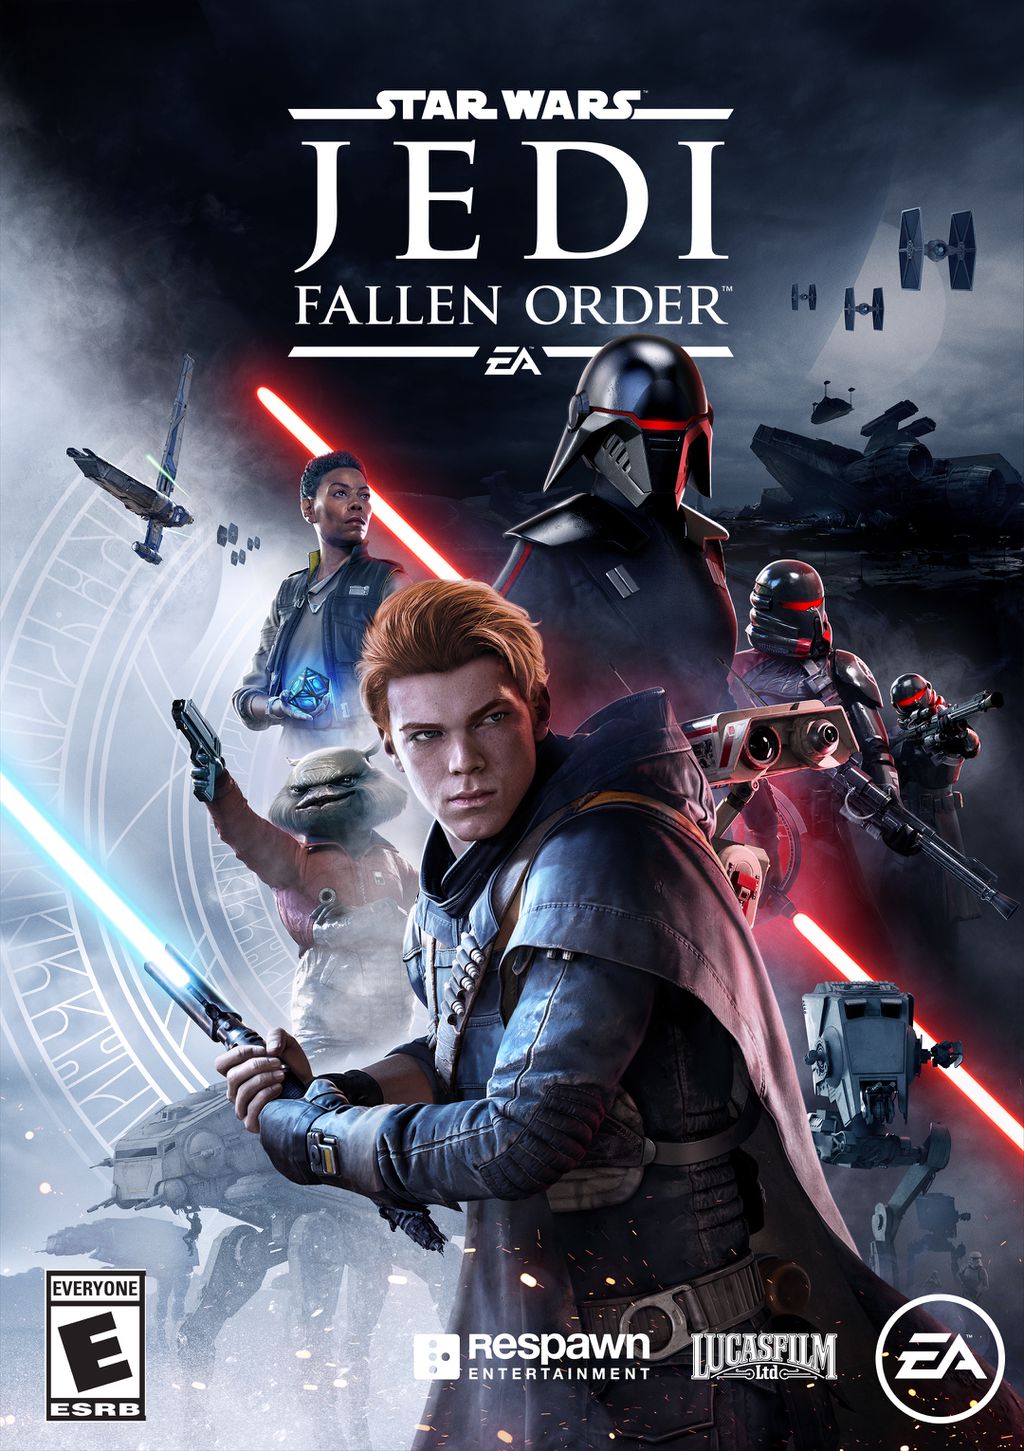 Arte de capa da versão deluxe de Jedi Fallen Order (Imagem: EA)